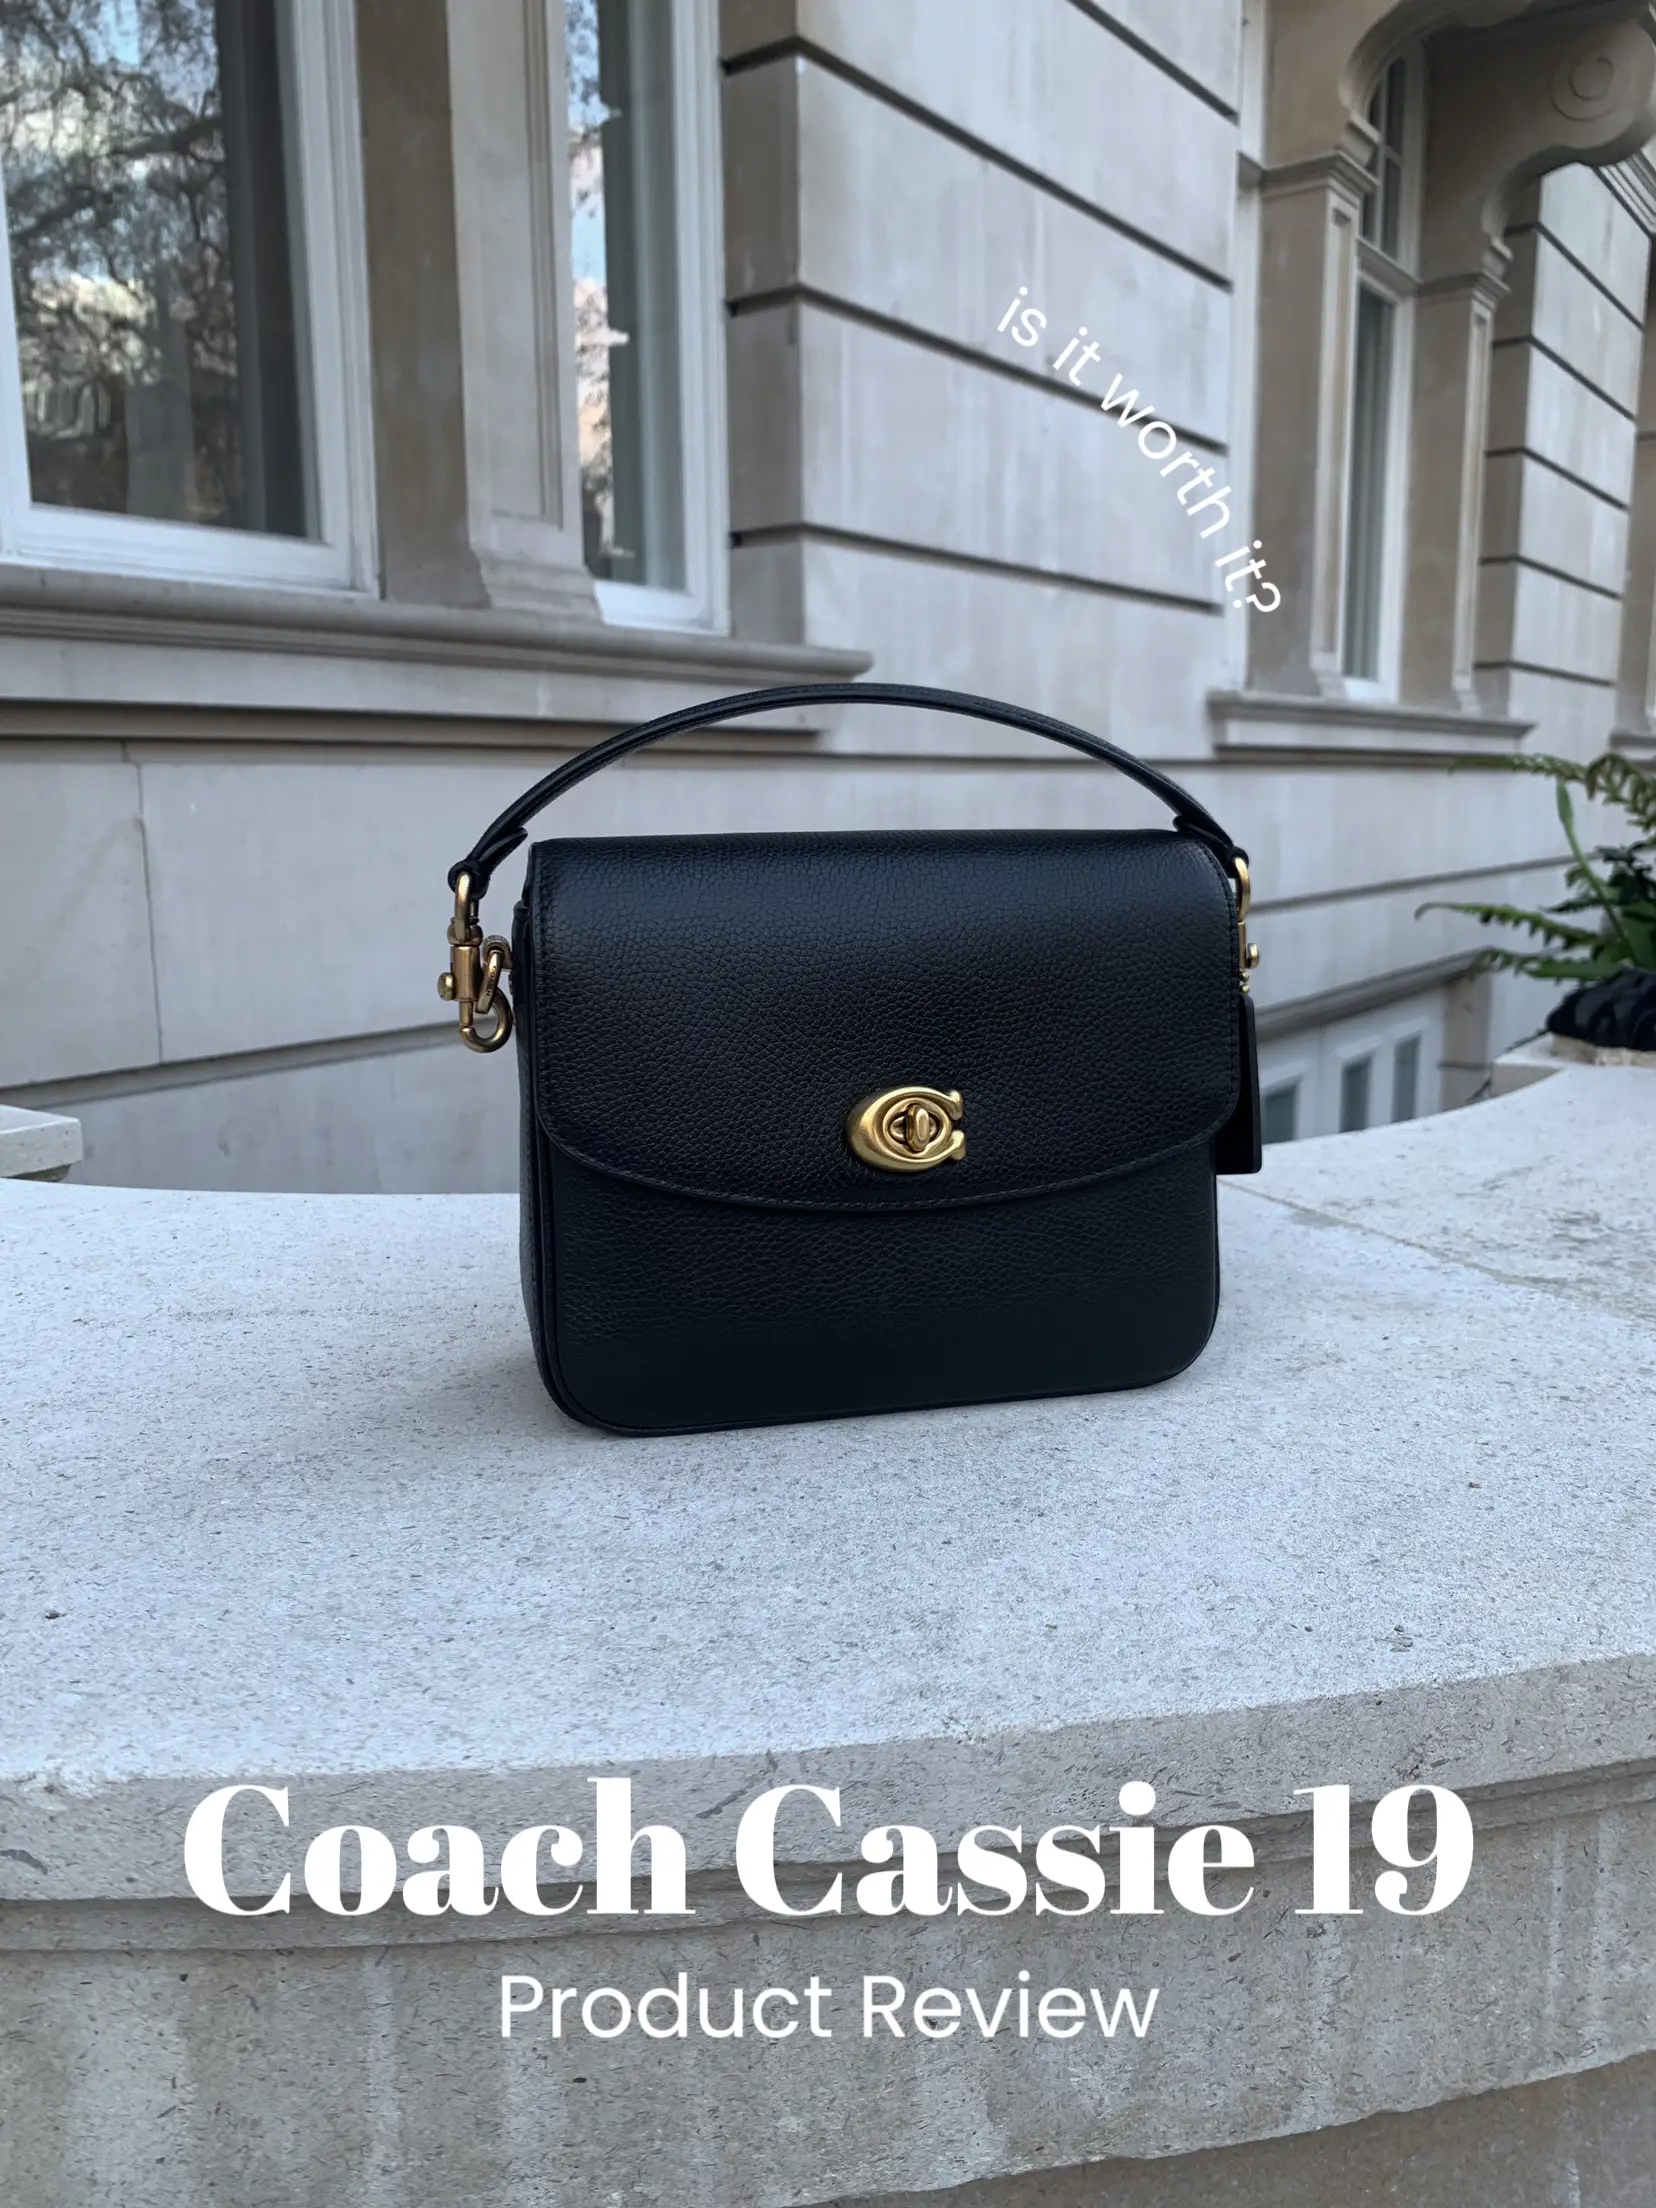 Cassie Corssbody 19 Camera Bag - Coach - Grey - Leather